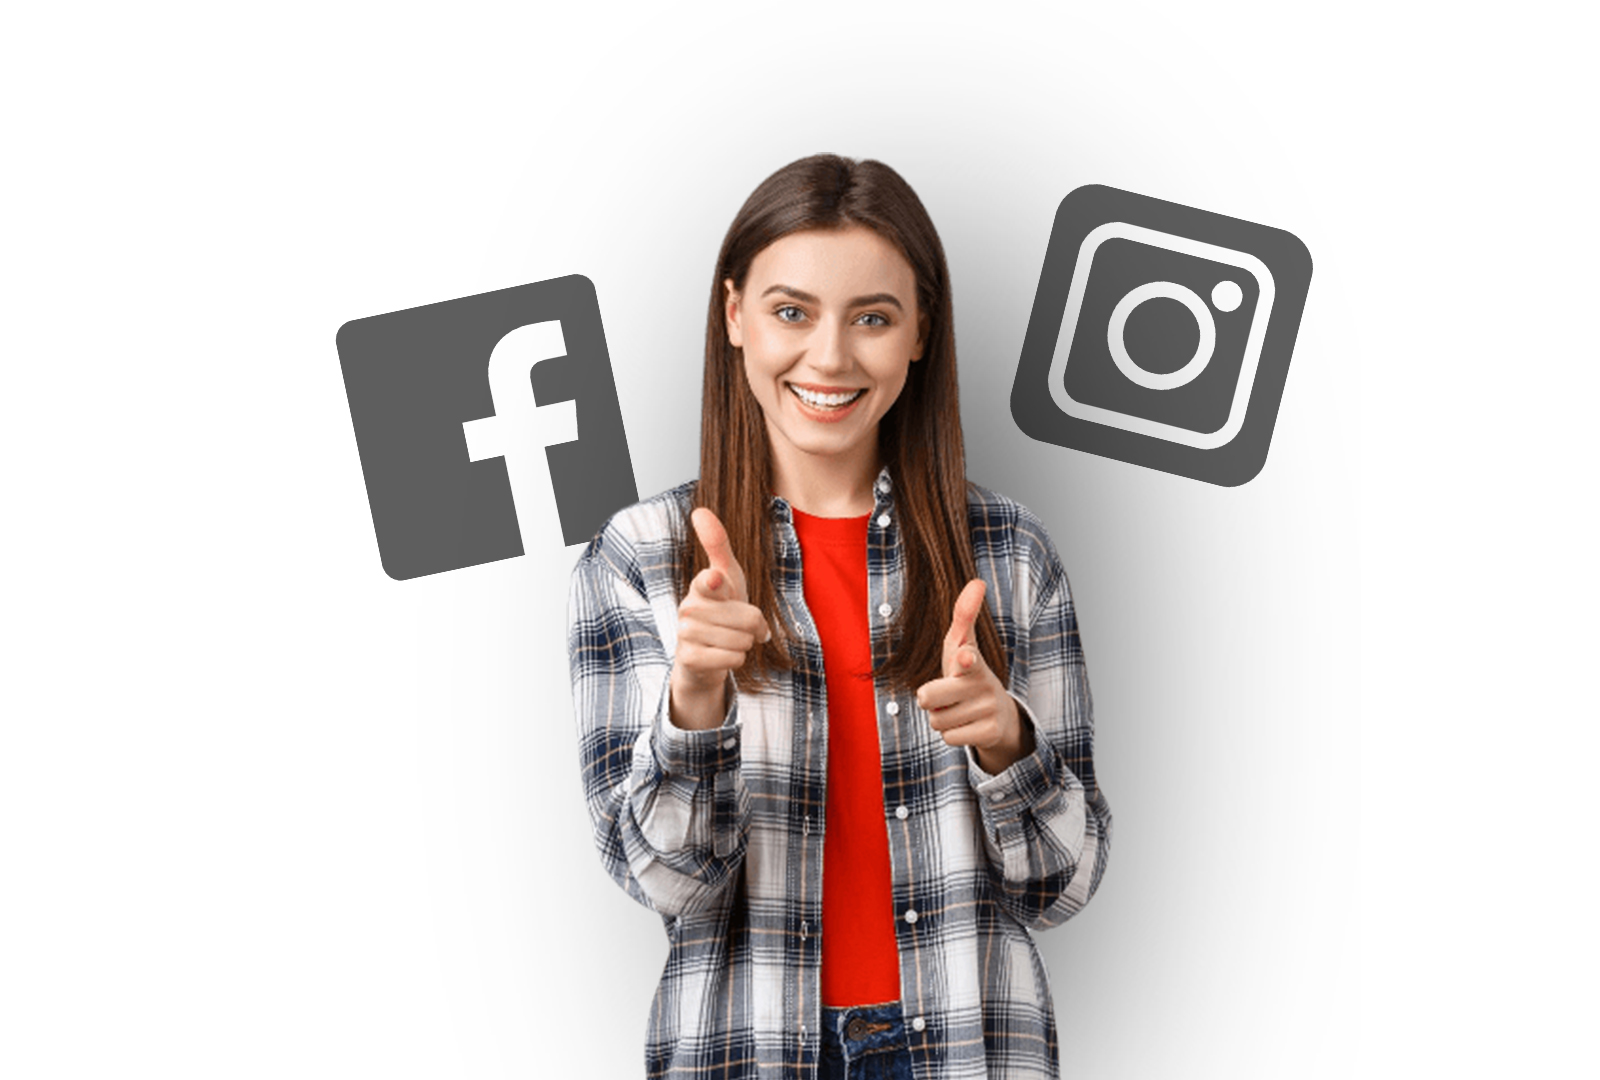 Facebook and Instagram ads